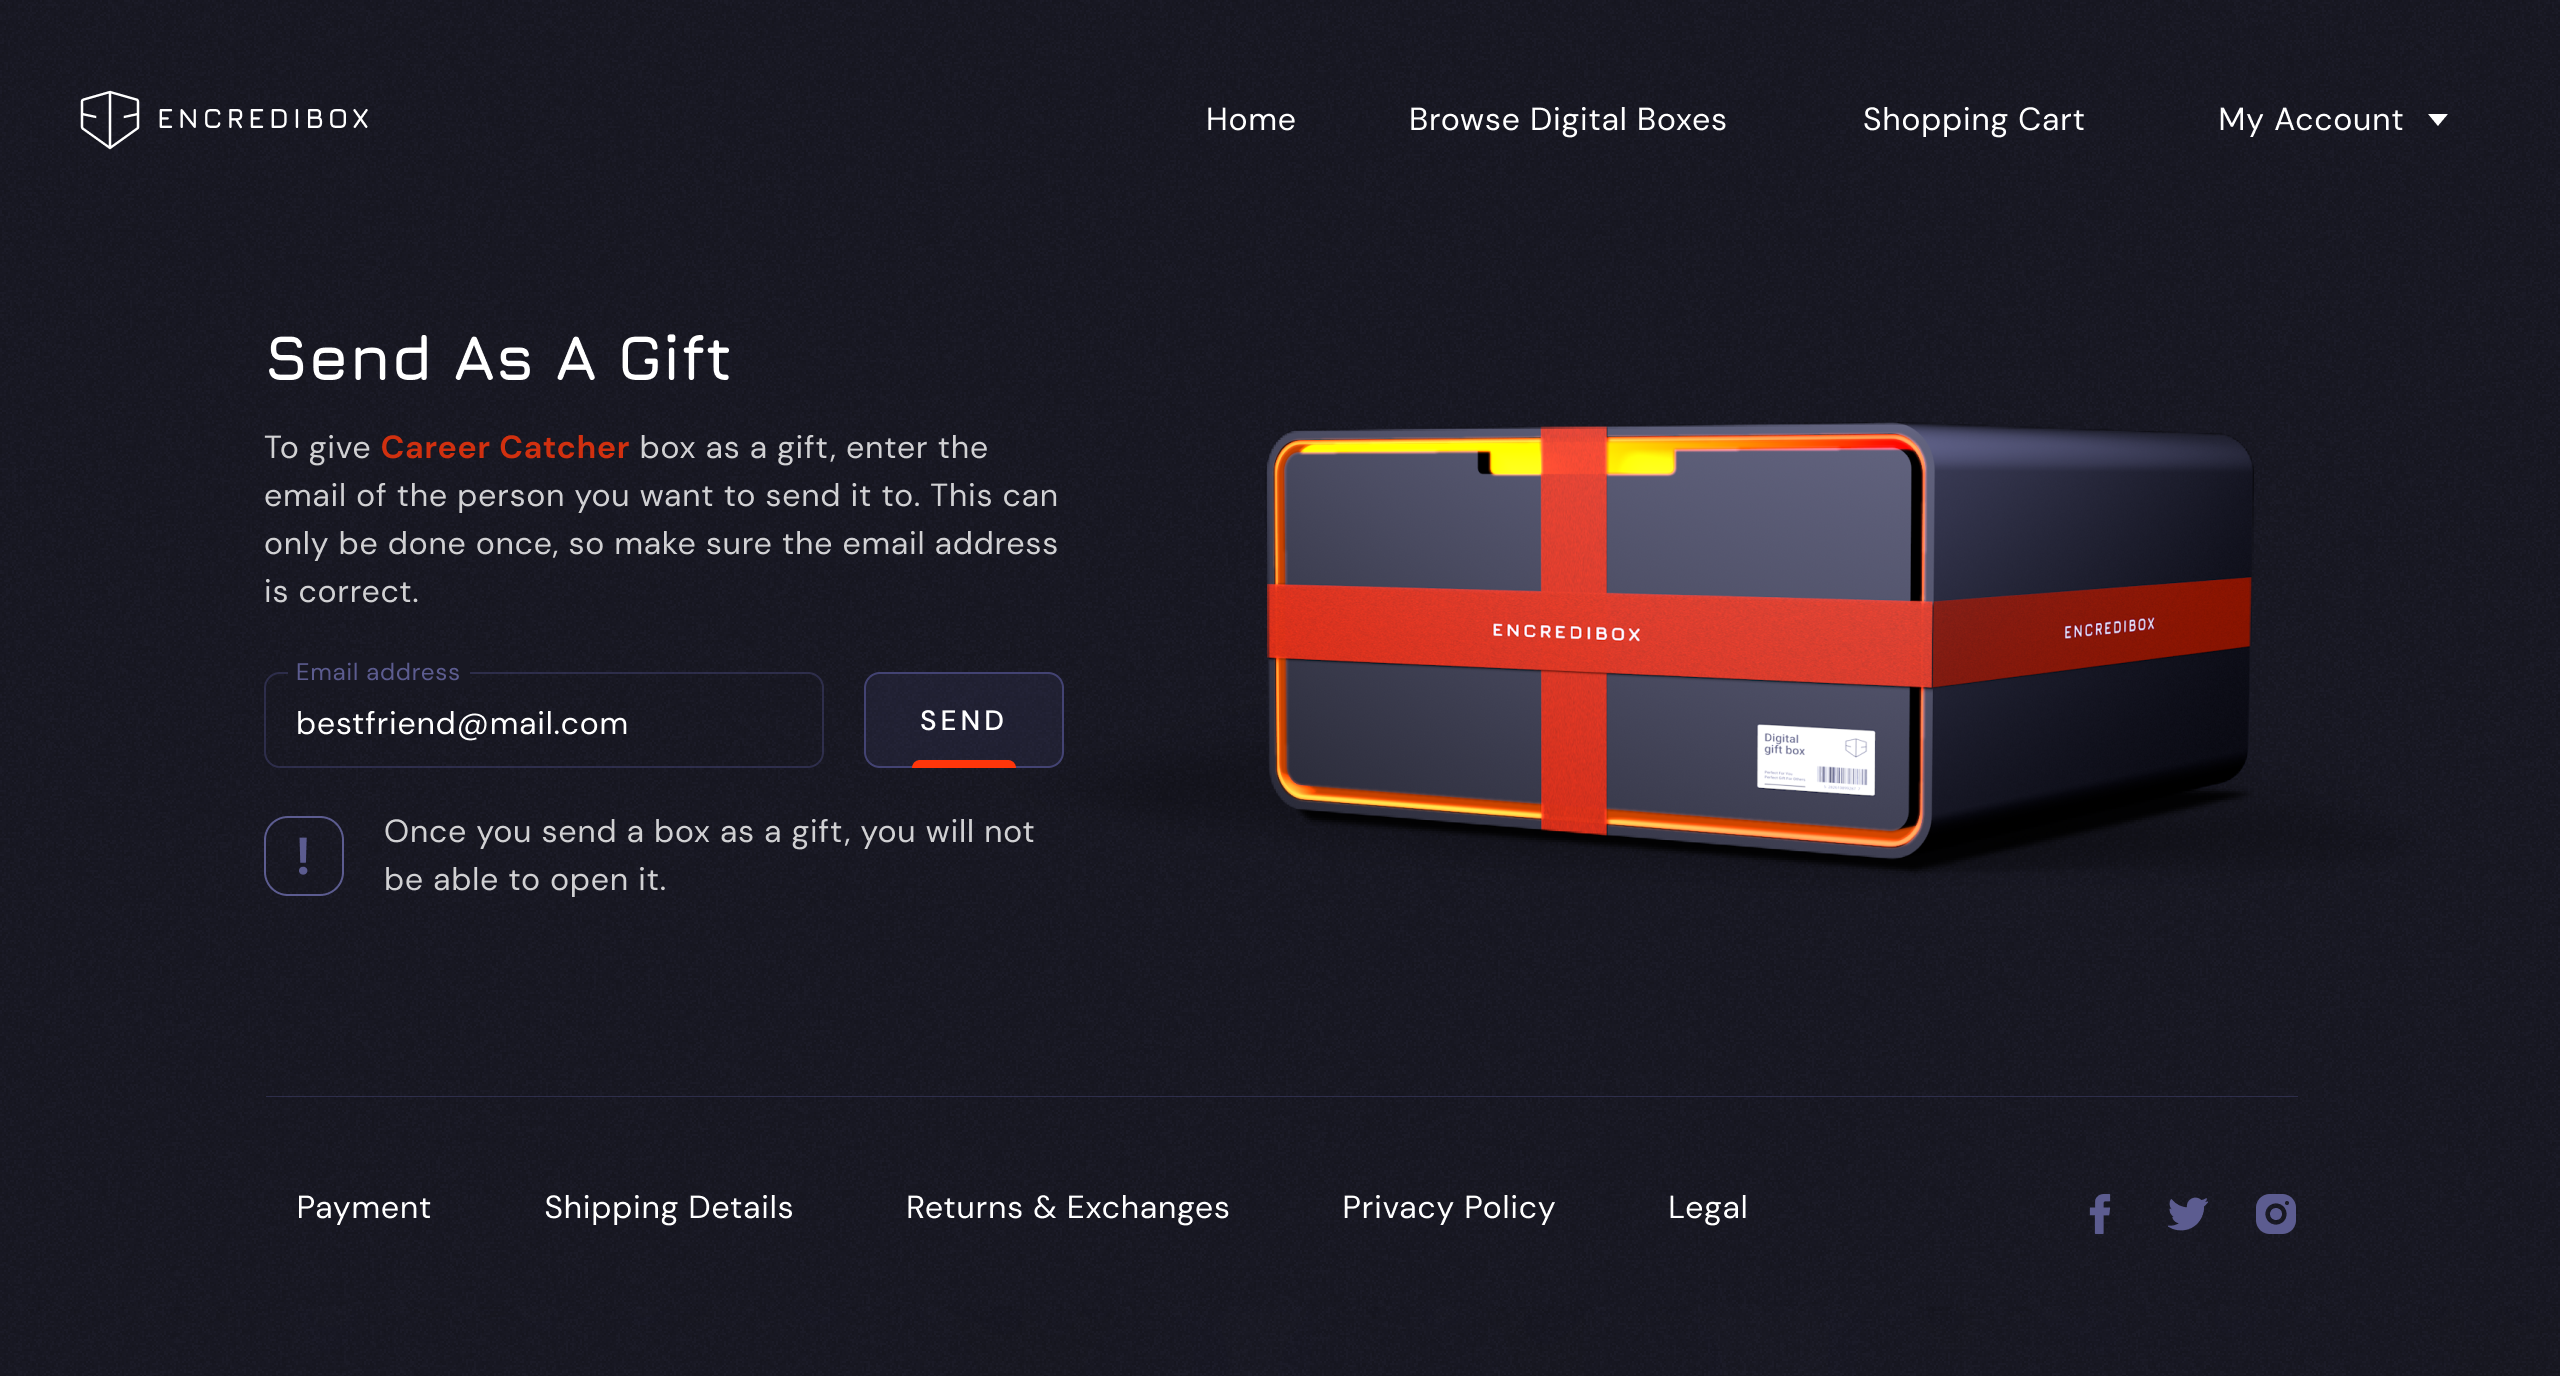 Vega Digital Awards Winner - Encredibox: Digital Gift Boxes